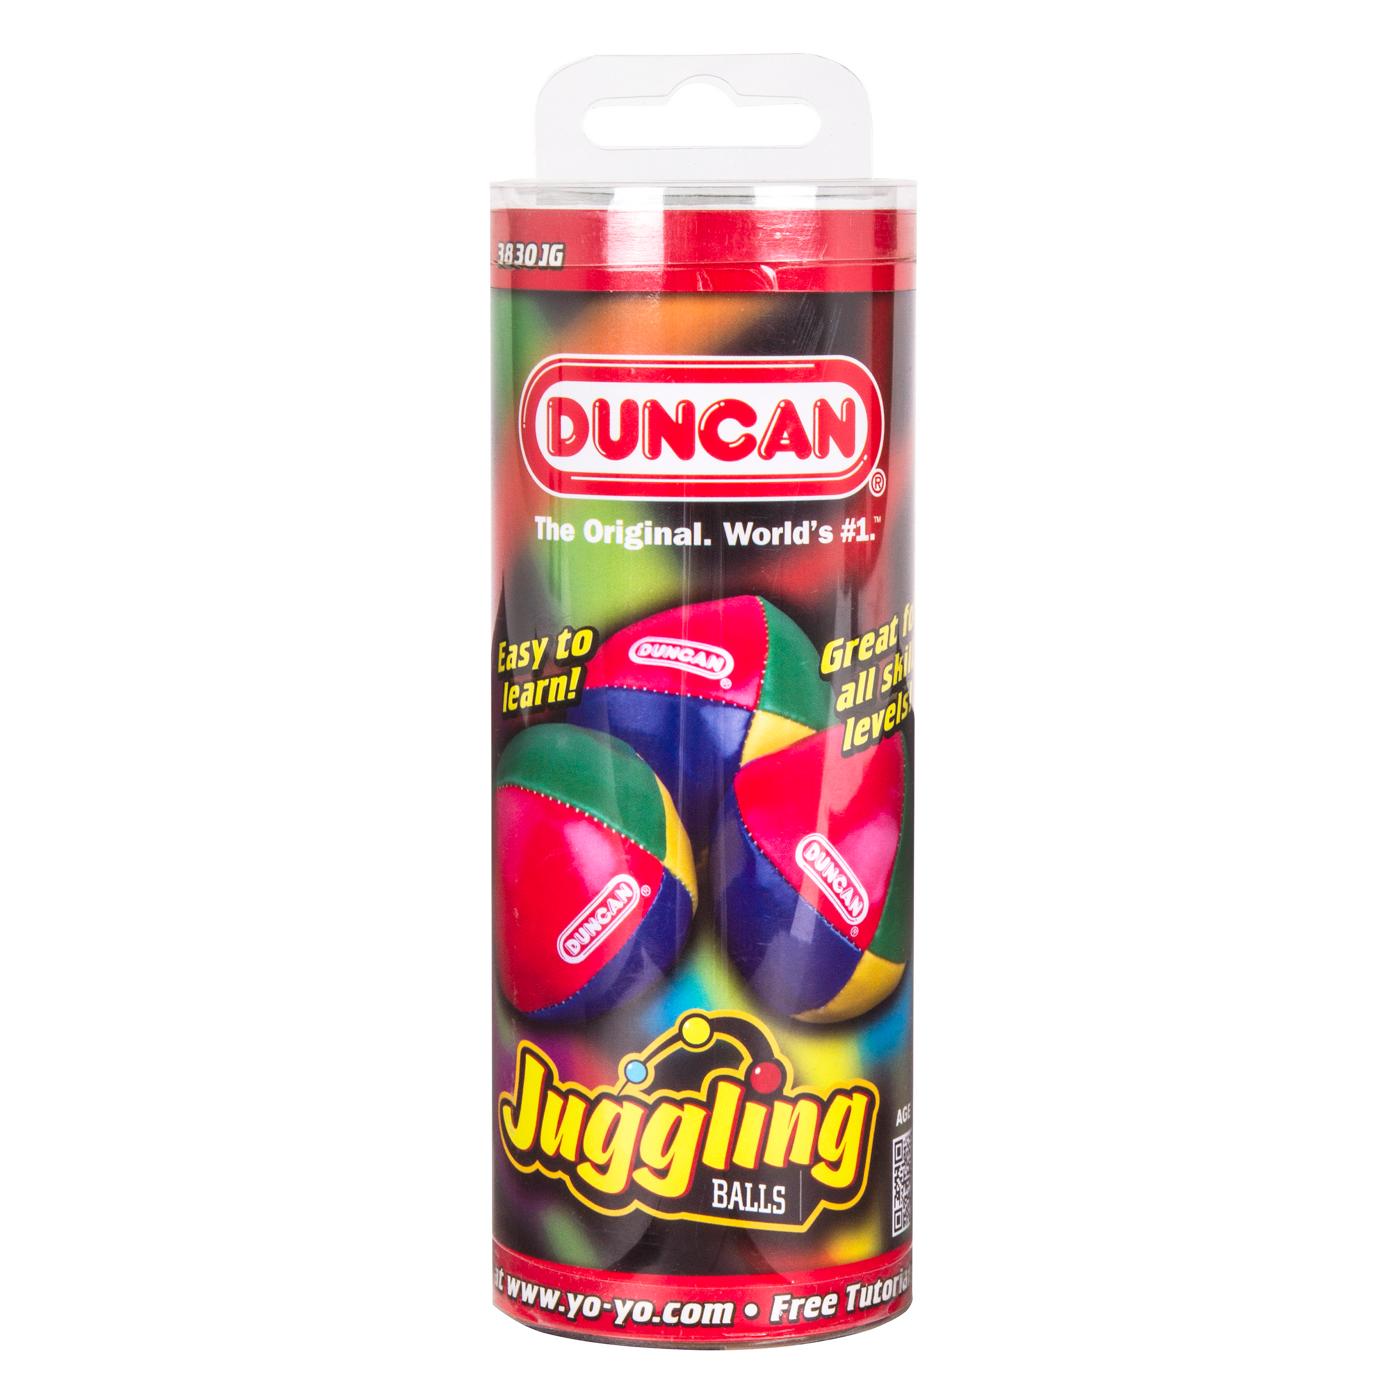 Duncan Juggling Balls; image 1 of 2